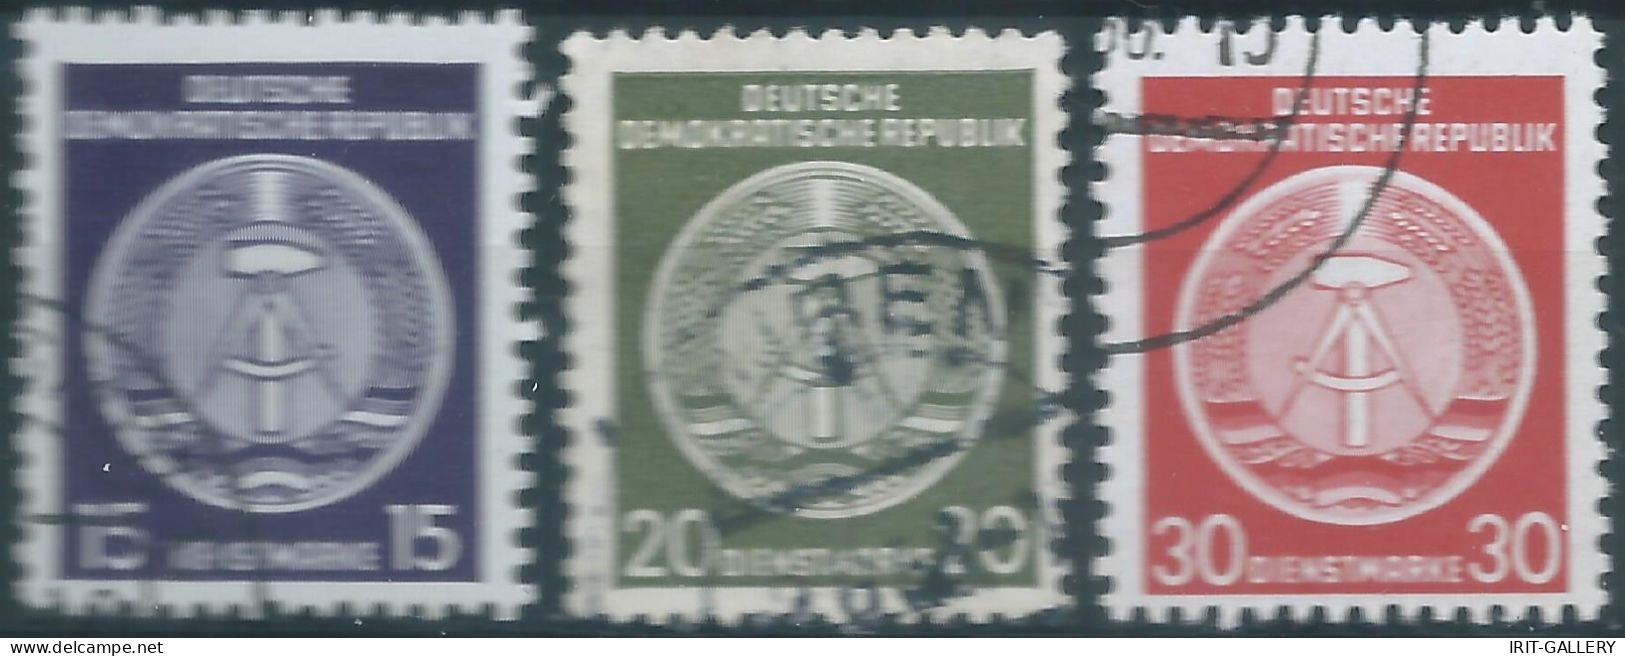 Germany-Deutschland,1954 /1956 Eastern Democratic Republic,DDR ,Service, Obliterated - Oblitérés